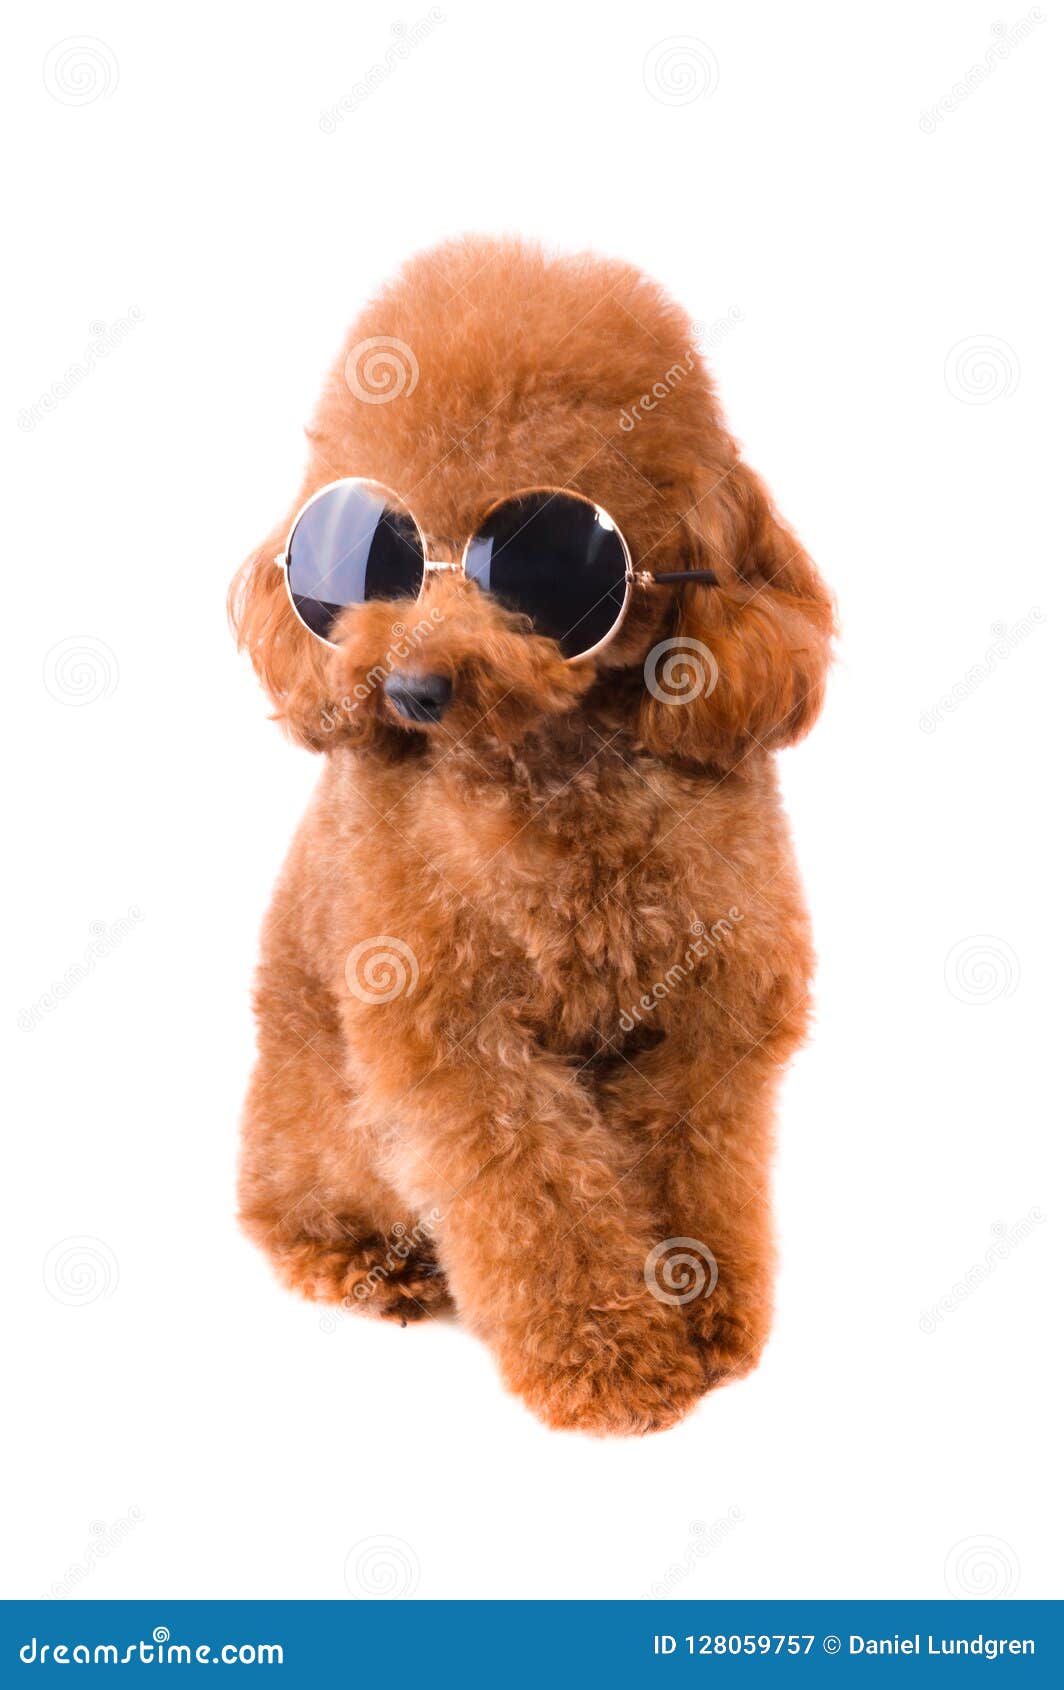 Adorable Mini Toy Poodle Golden Brown Stock Photo 658023595